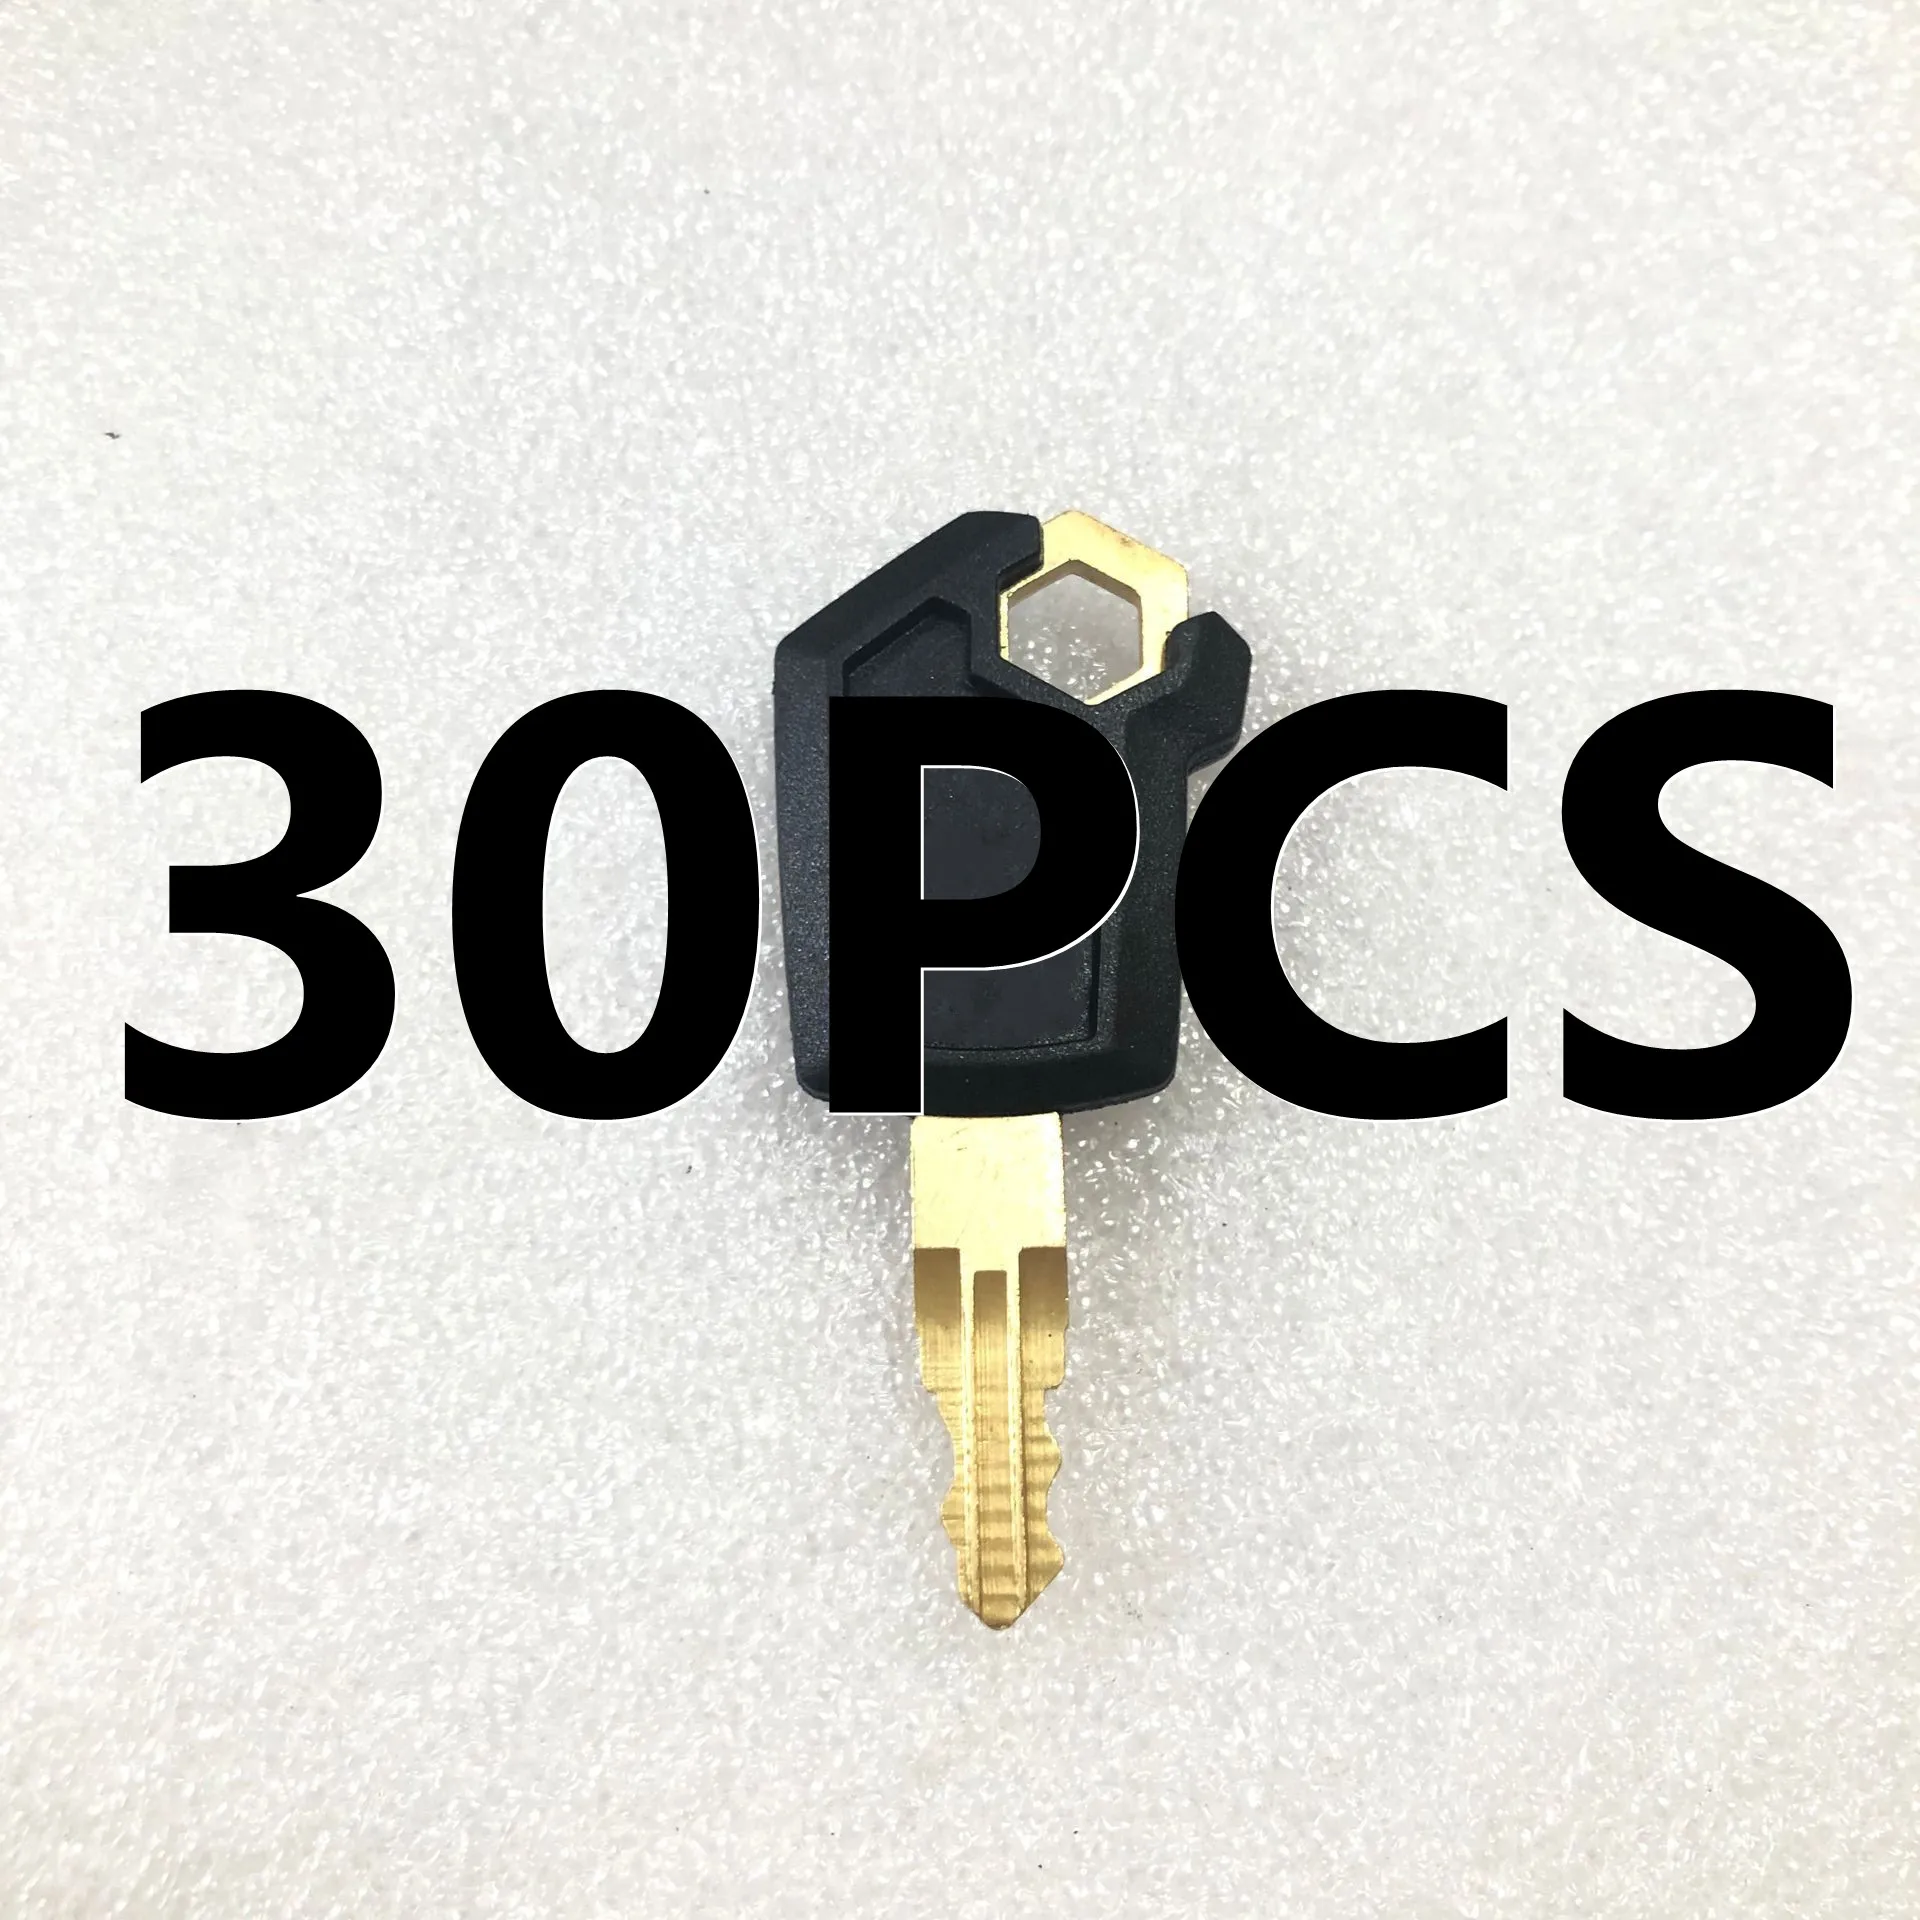 

30PCS 5P8500 Copper Key Ignition Key for Caterpillar Excavator E200B E320/B/C/D